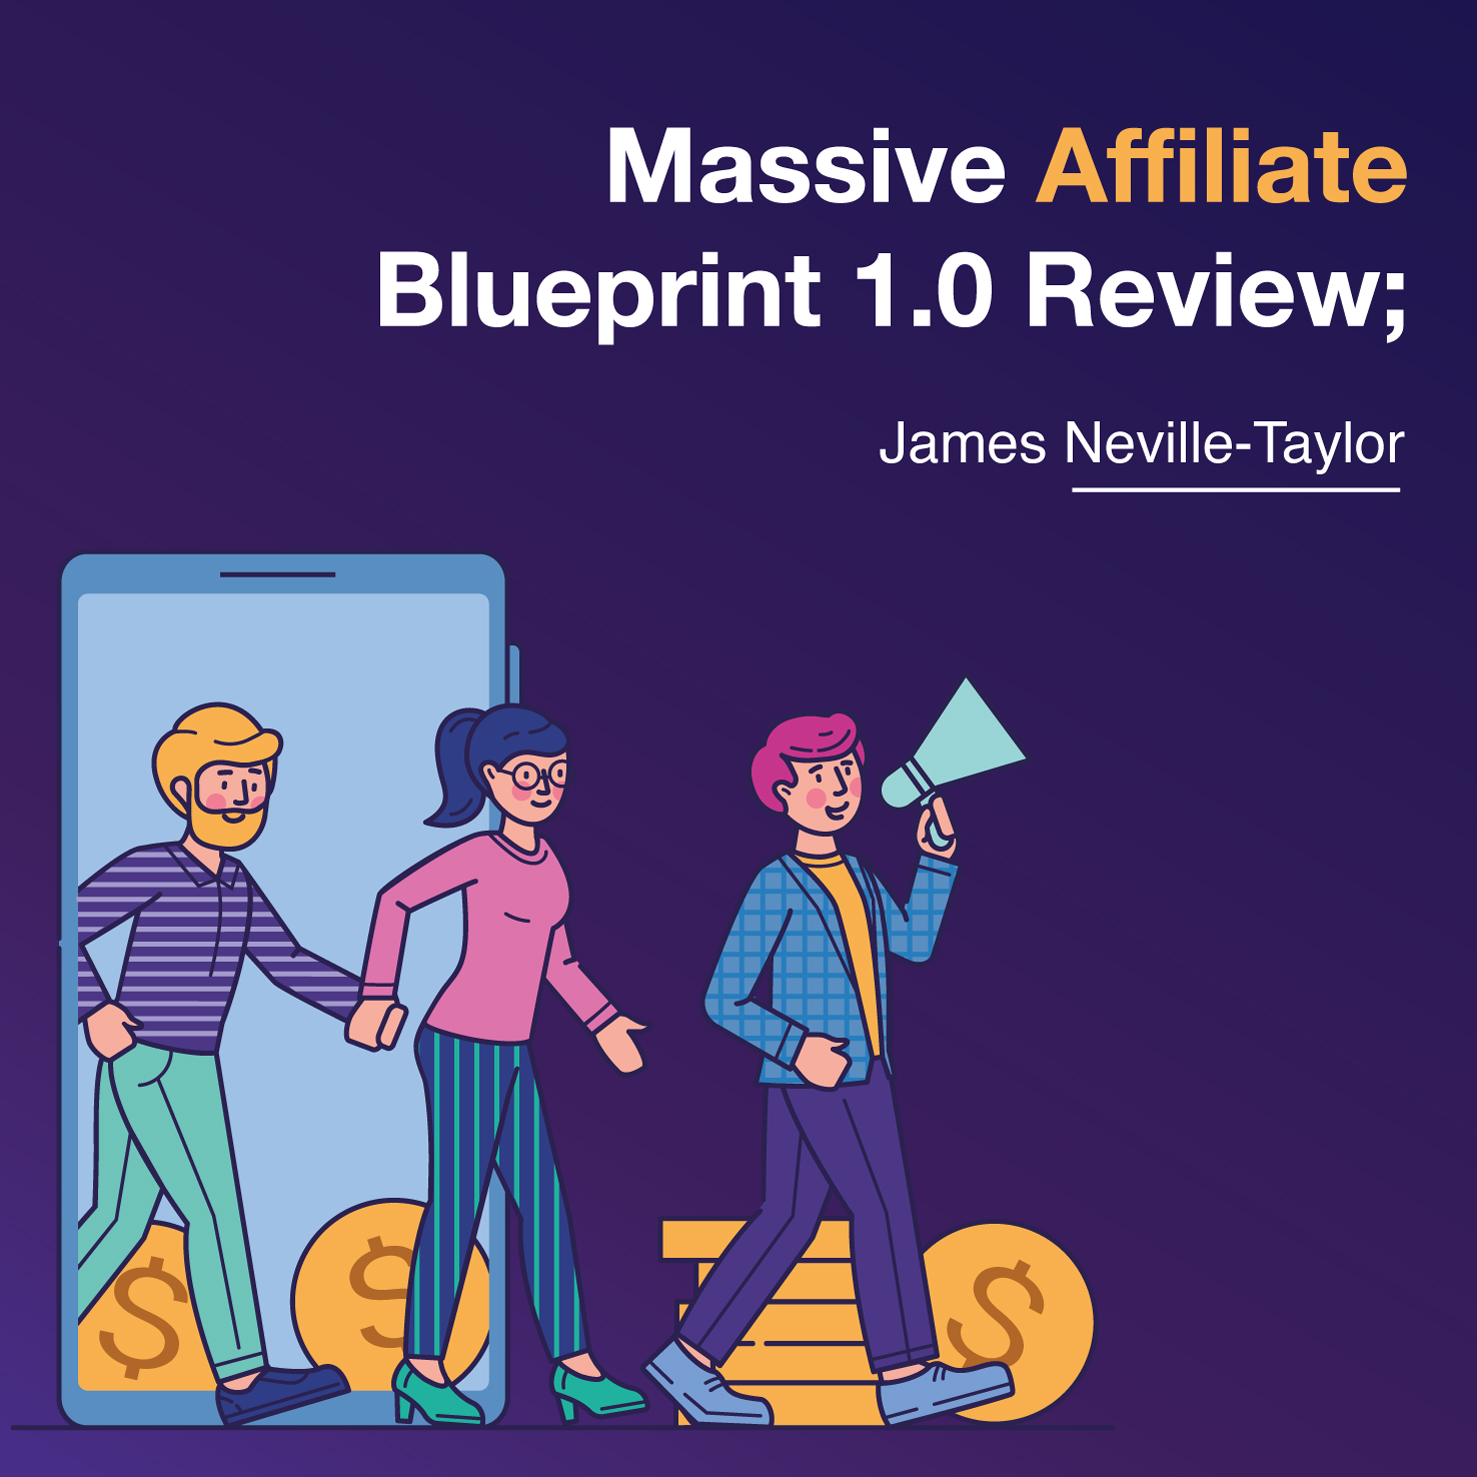 Massive Affiliate Blueprint 1.0 Review